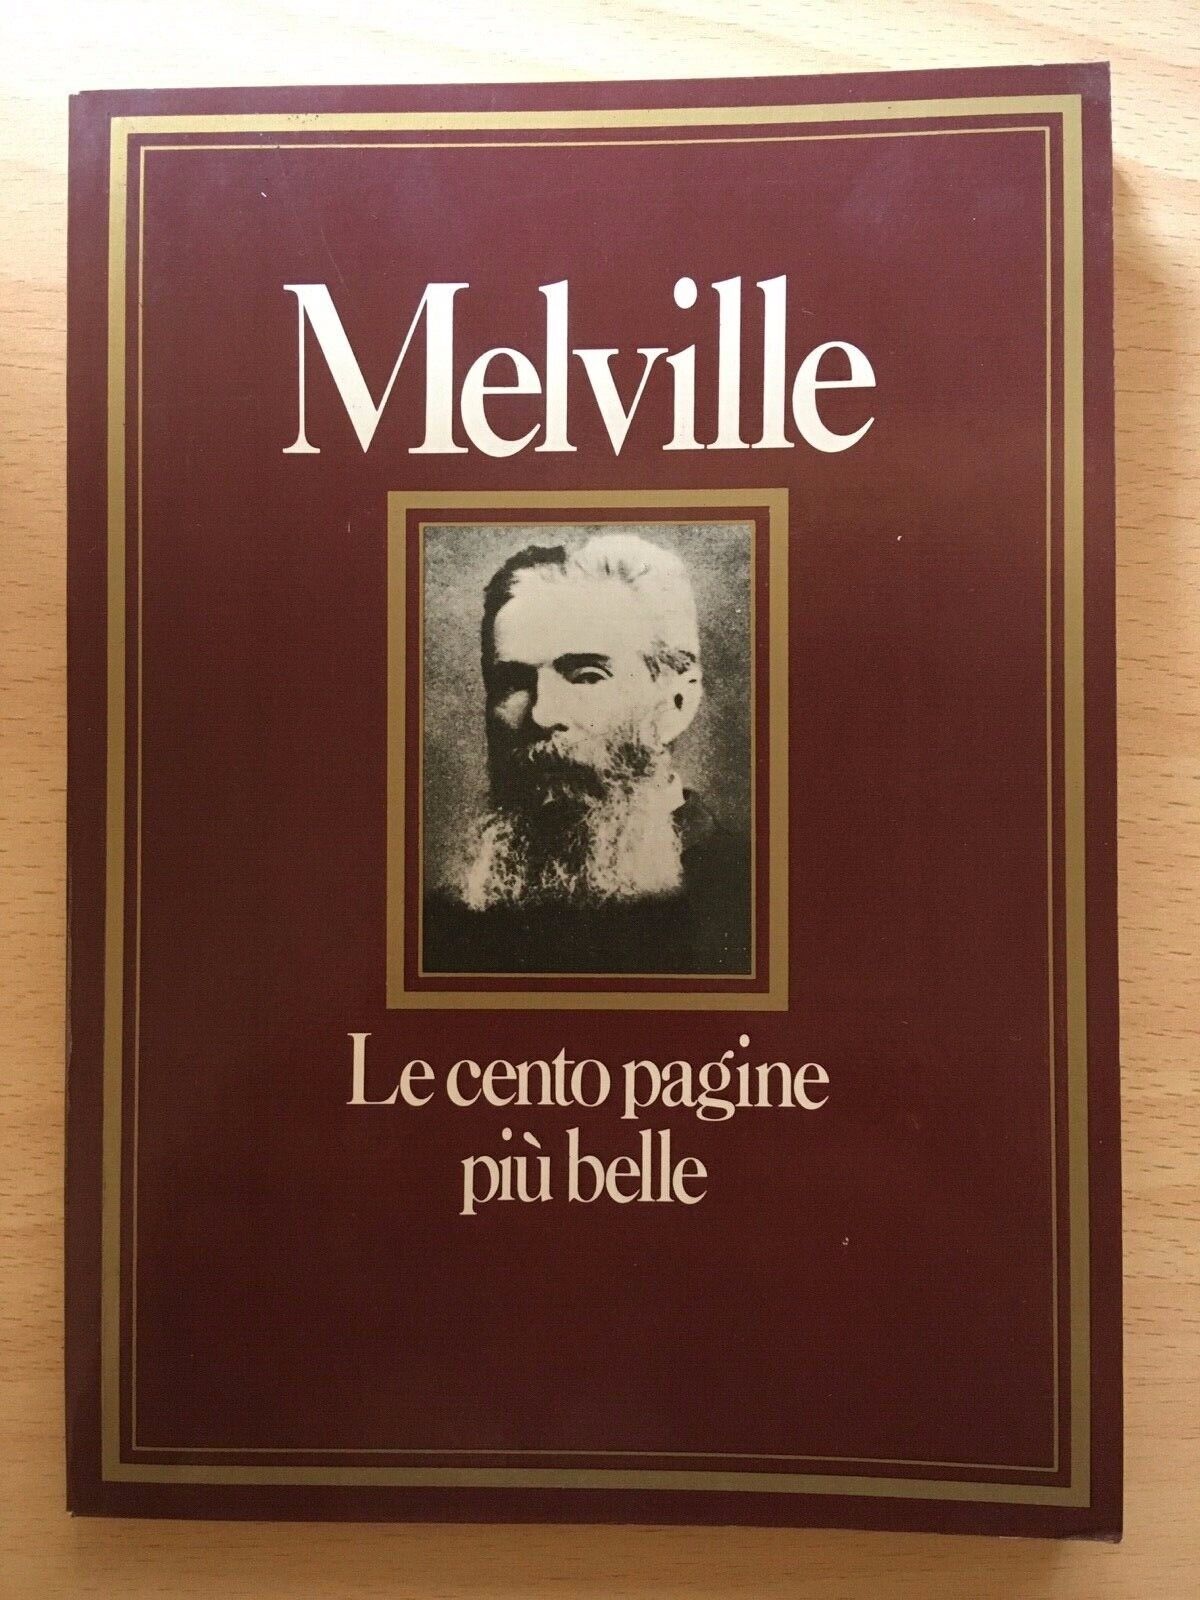 Melville - Le cento pagine pi? belle - Barbara Lanati, 1982, Mondadori - V